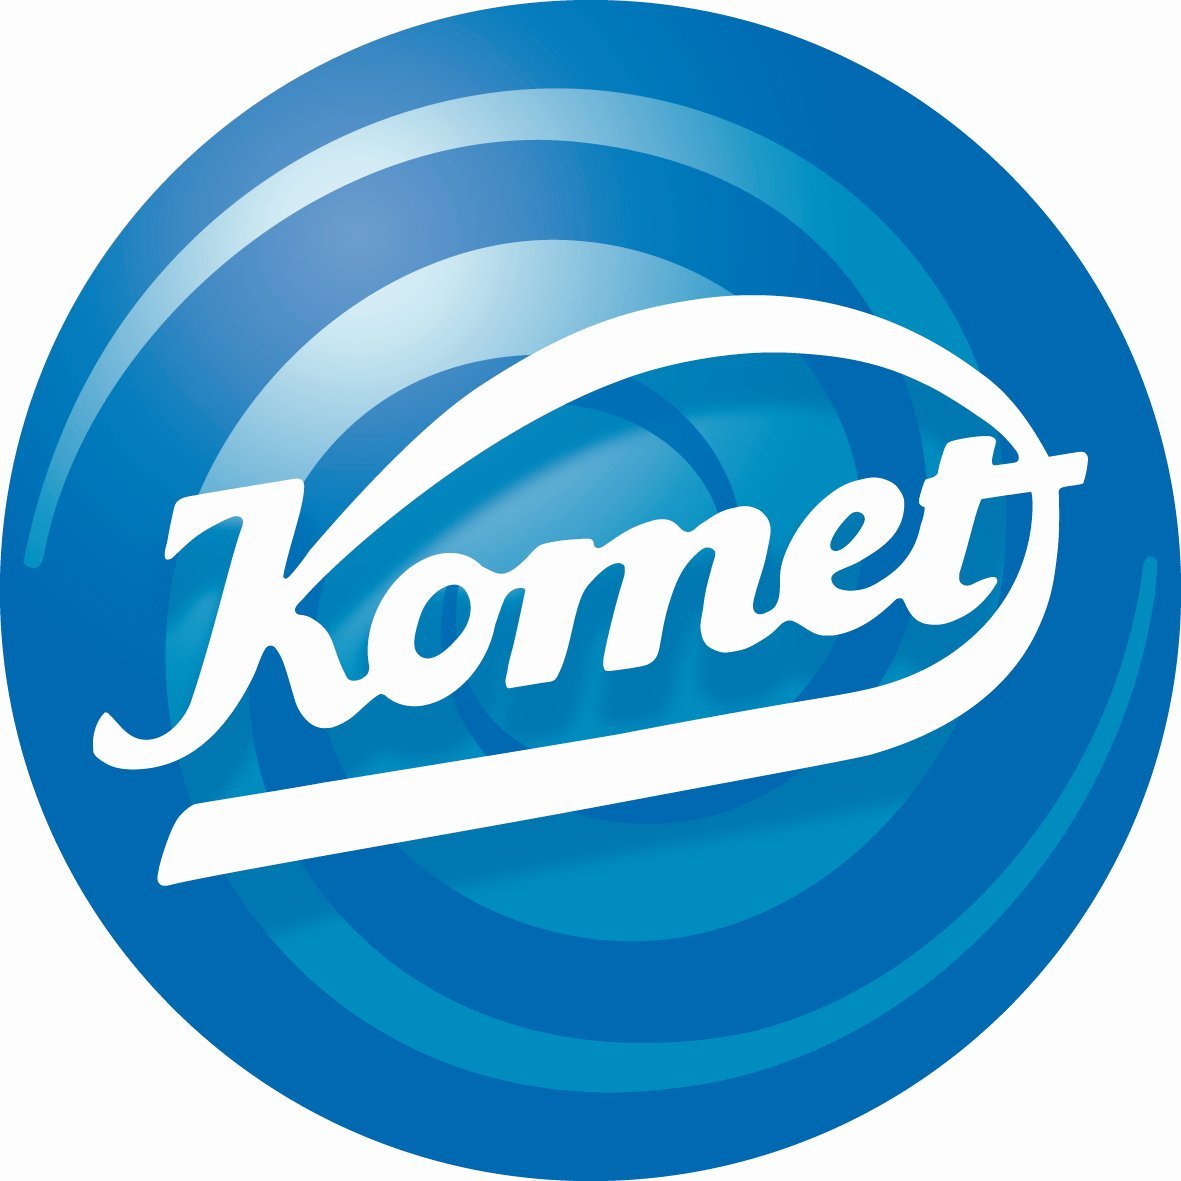 Komet logo.jpg